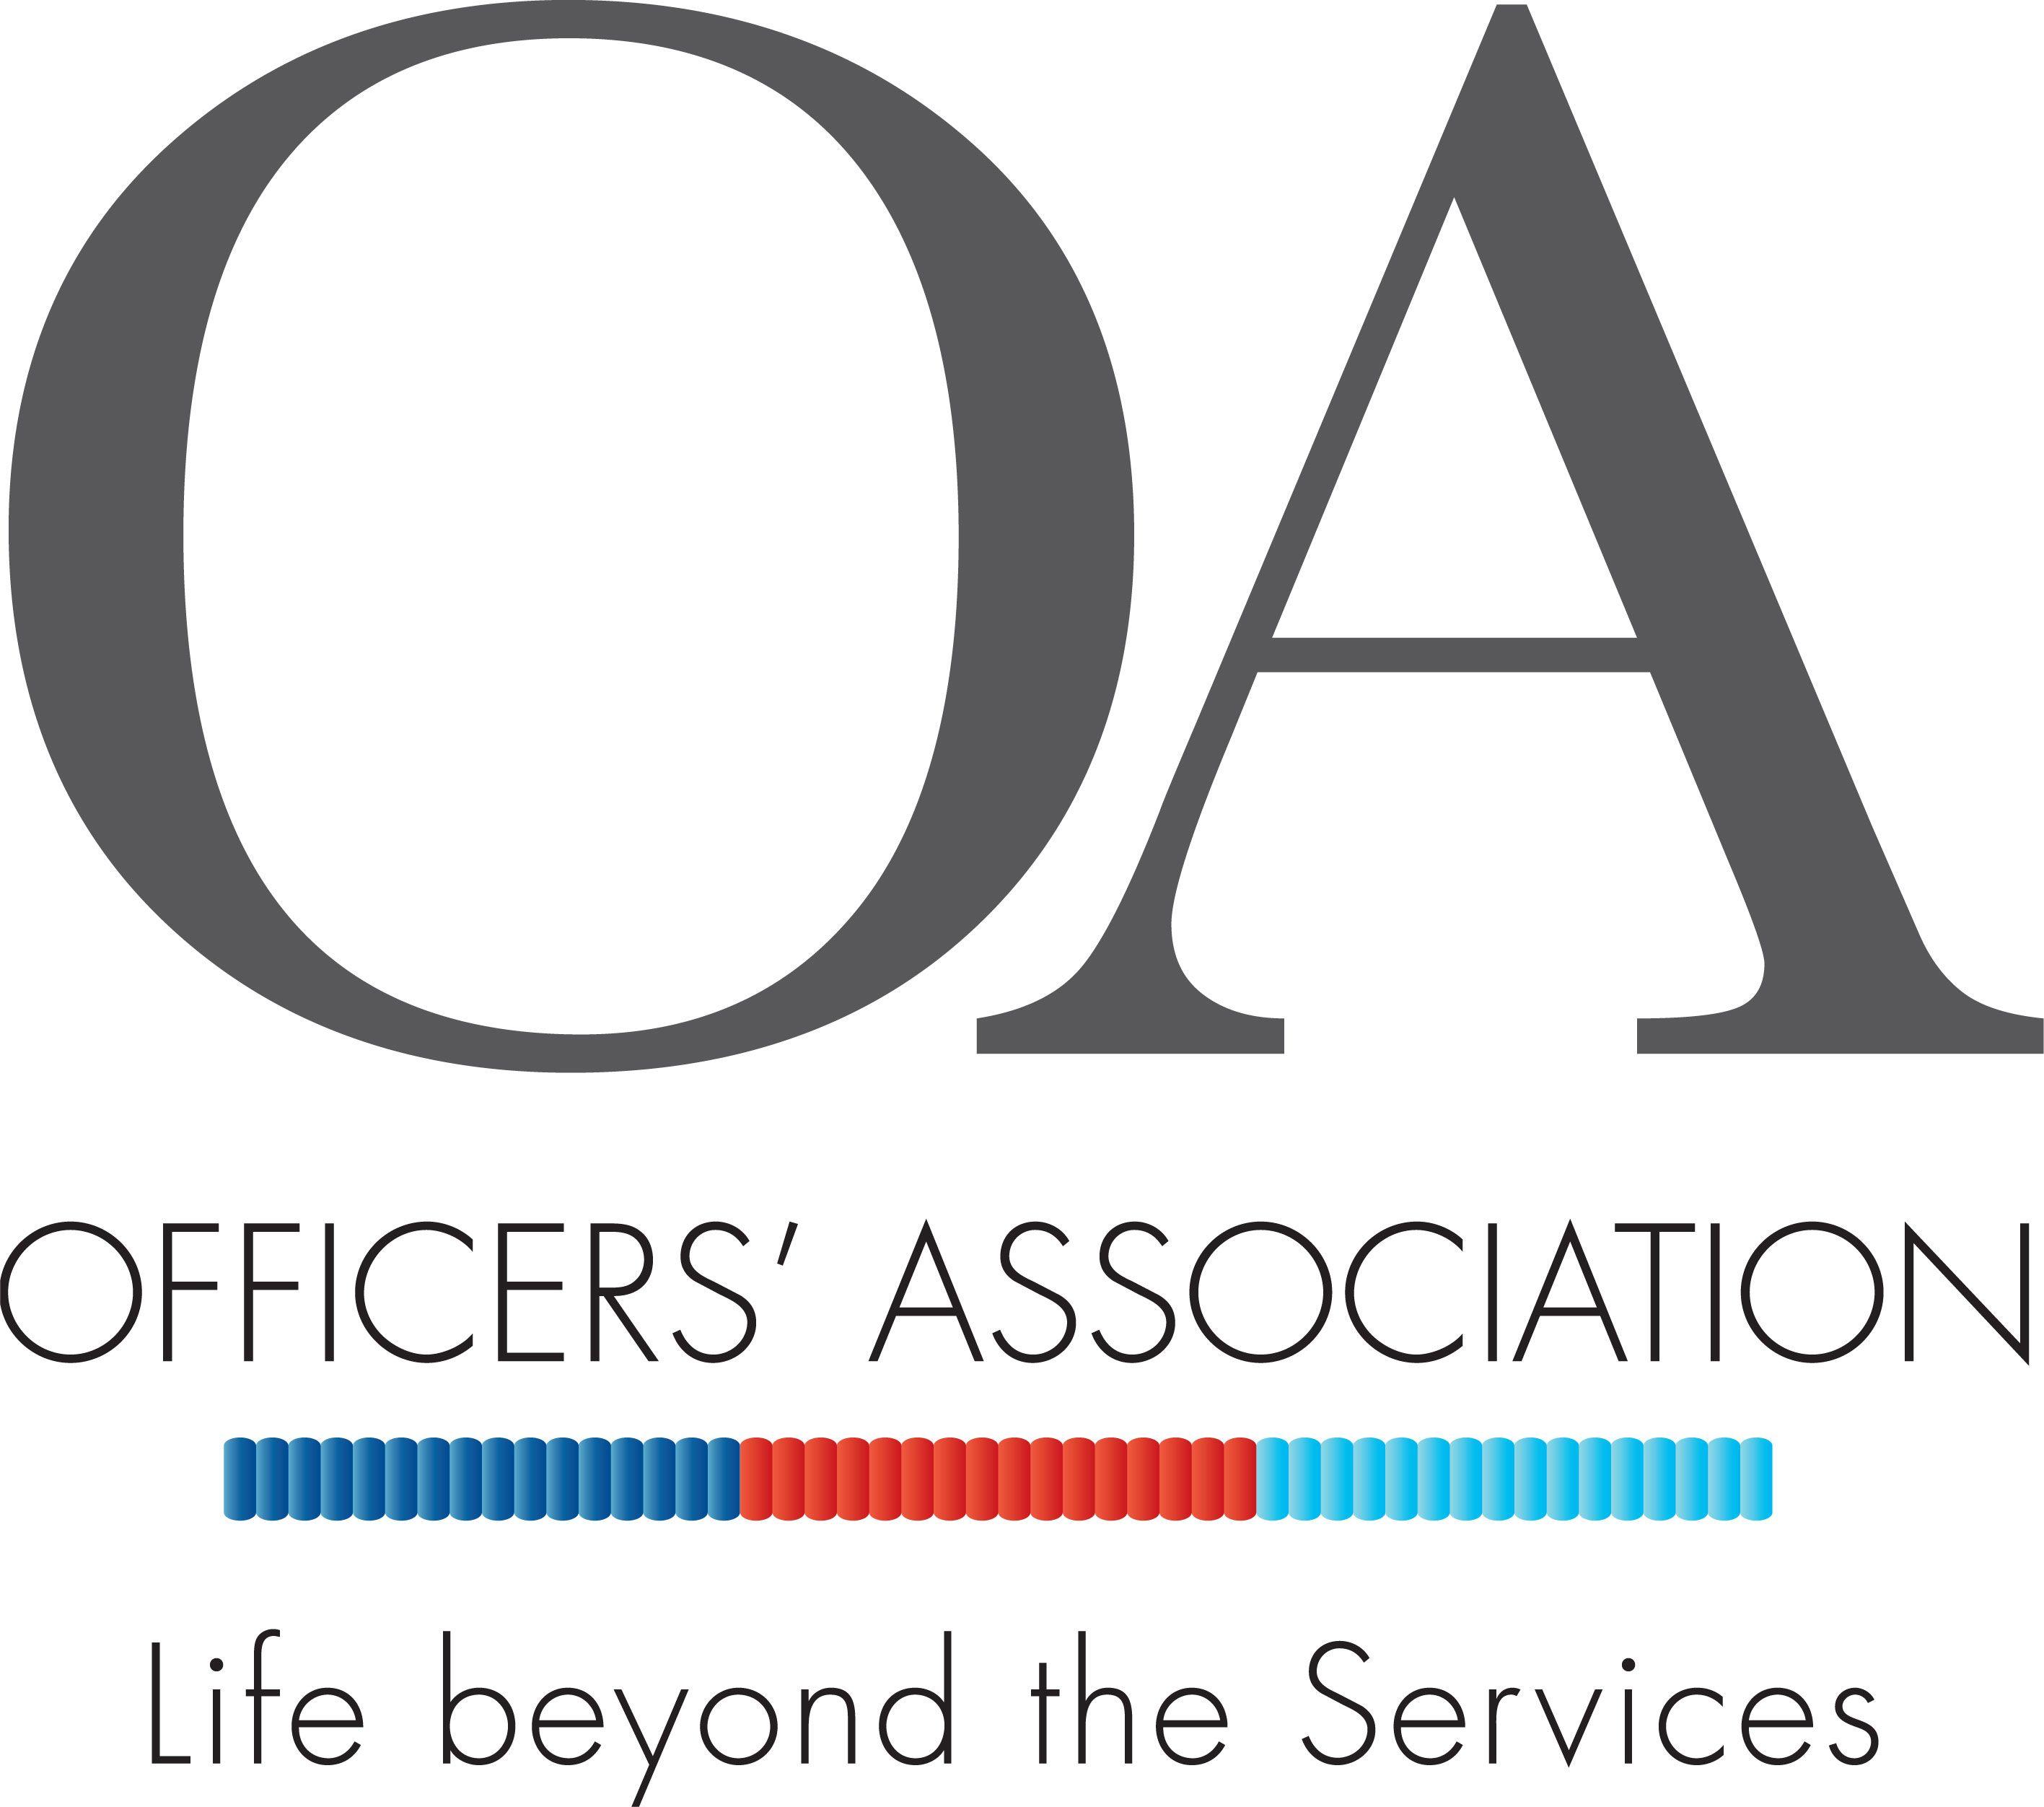 Association Logo - The Officers' Association